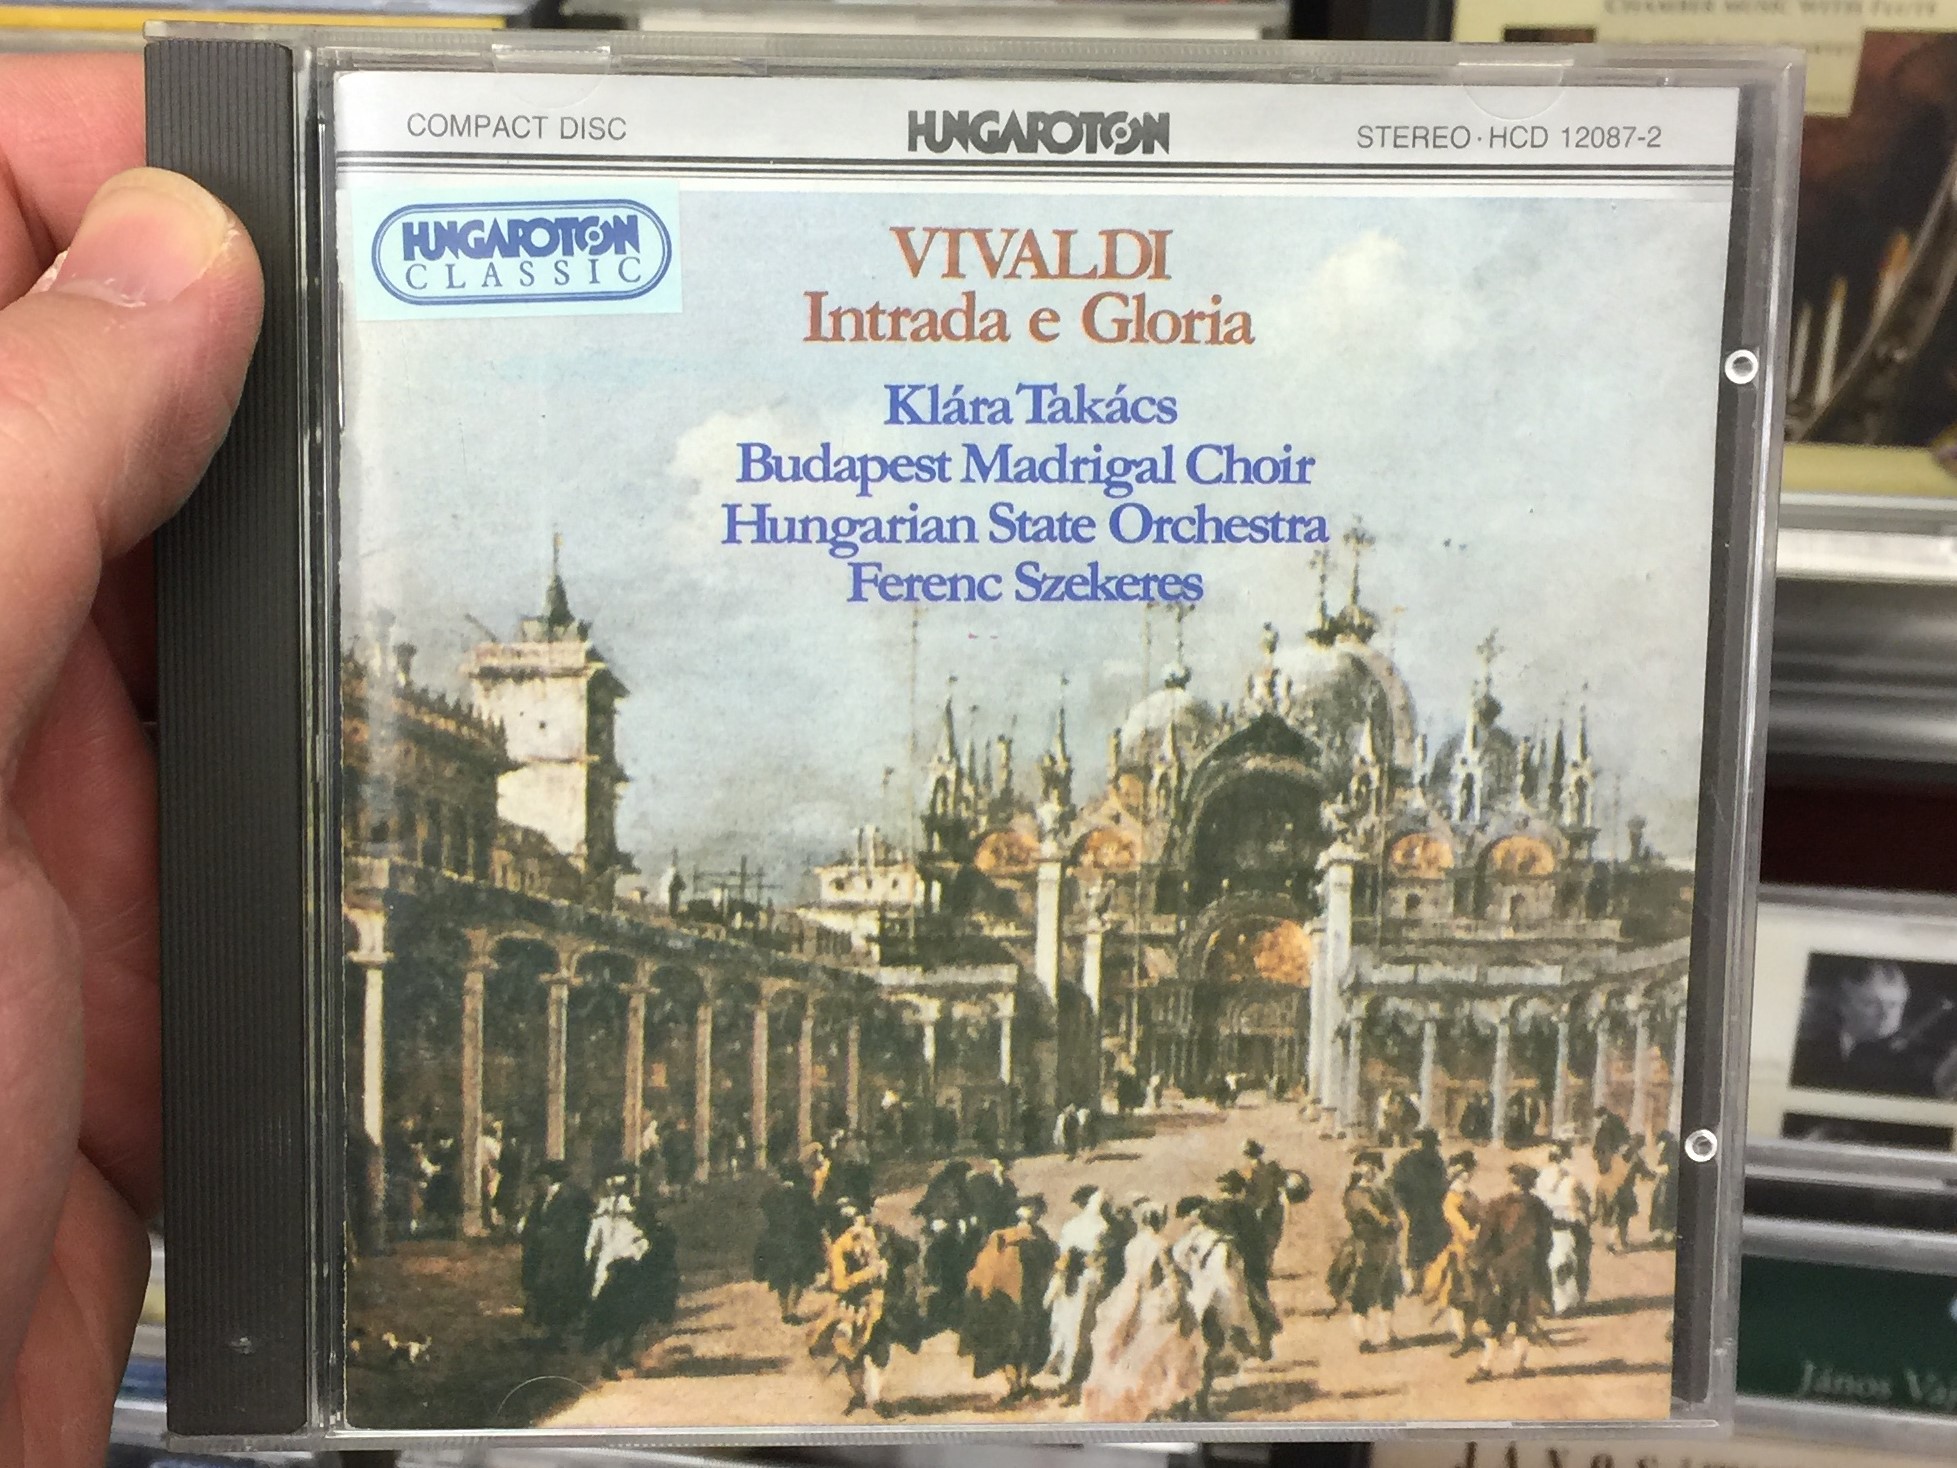 vivaldi-intrada-e-gloria-kl-ra-tak-cs-budapest-madrigal-choir-hungarian-state-orchestra-ferenc-szekeres-hungaroton-audio-cd-1981-stereo-hcd-12087-2-1-.jpg